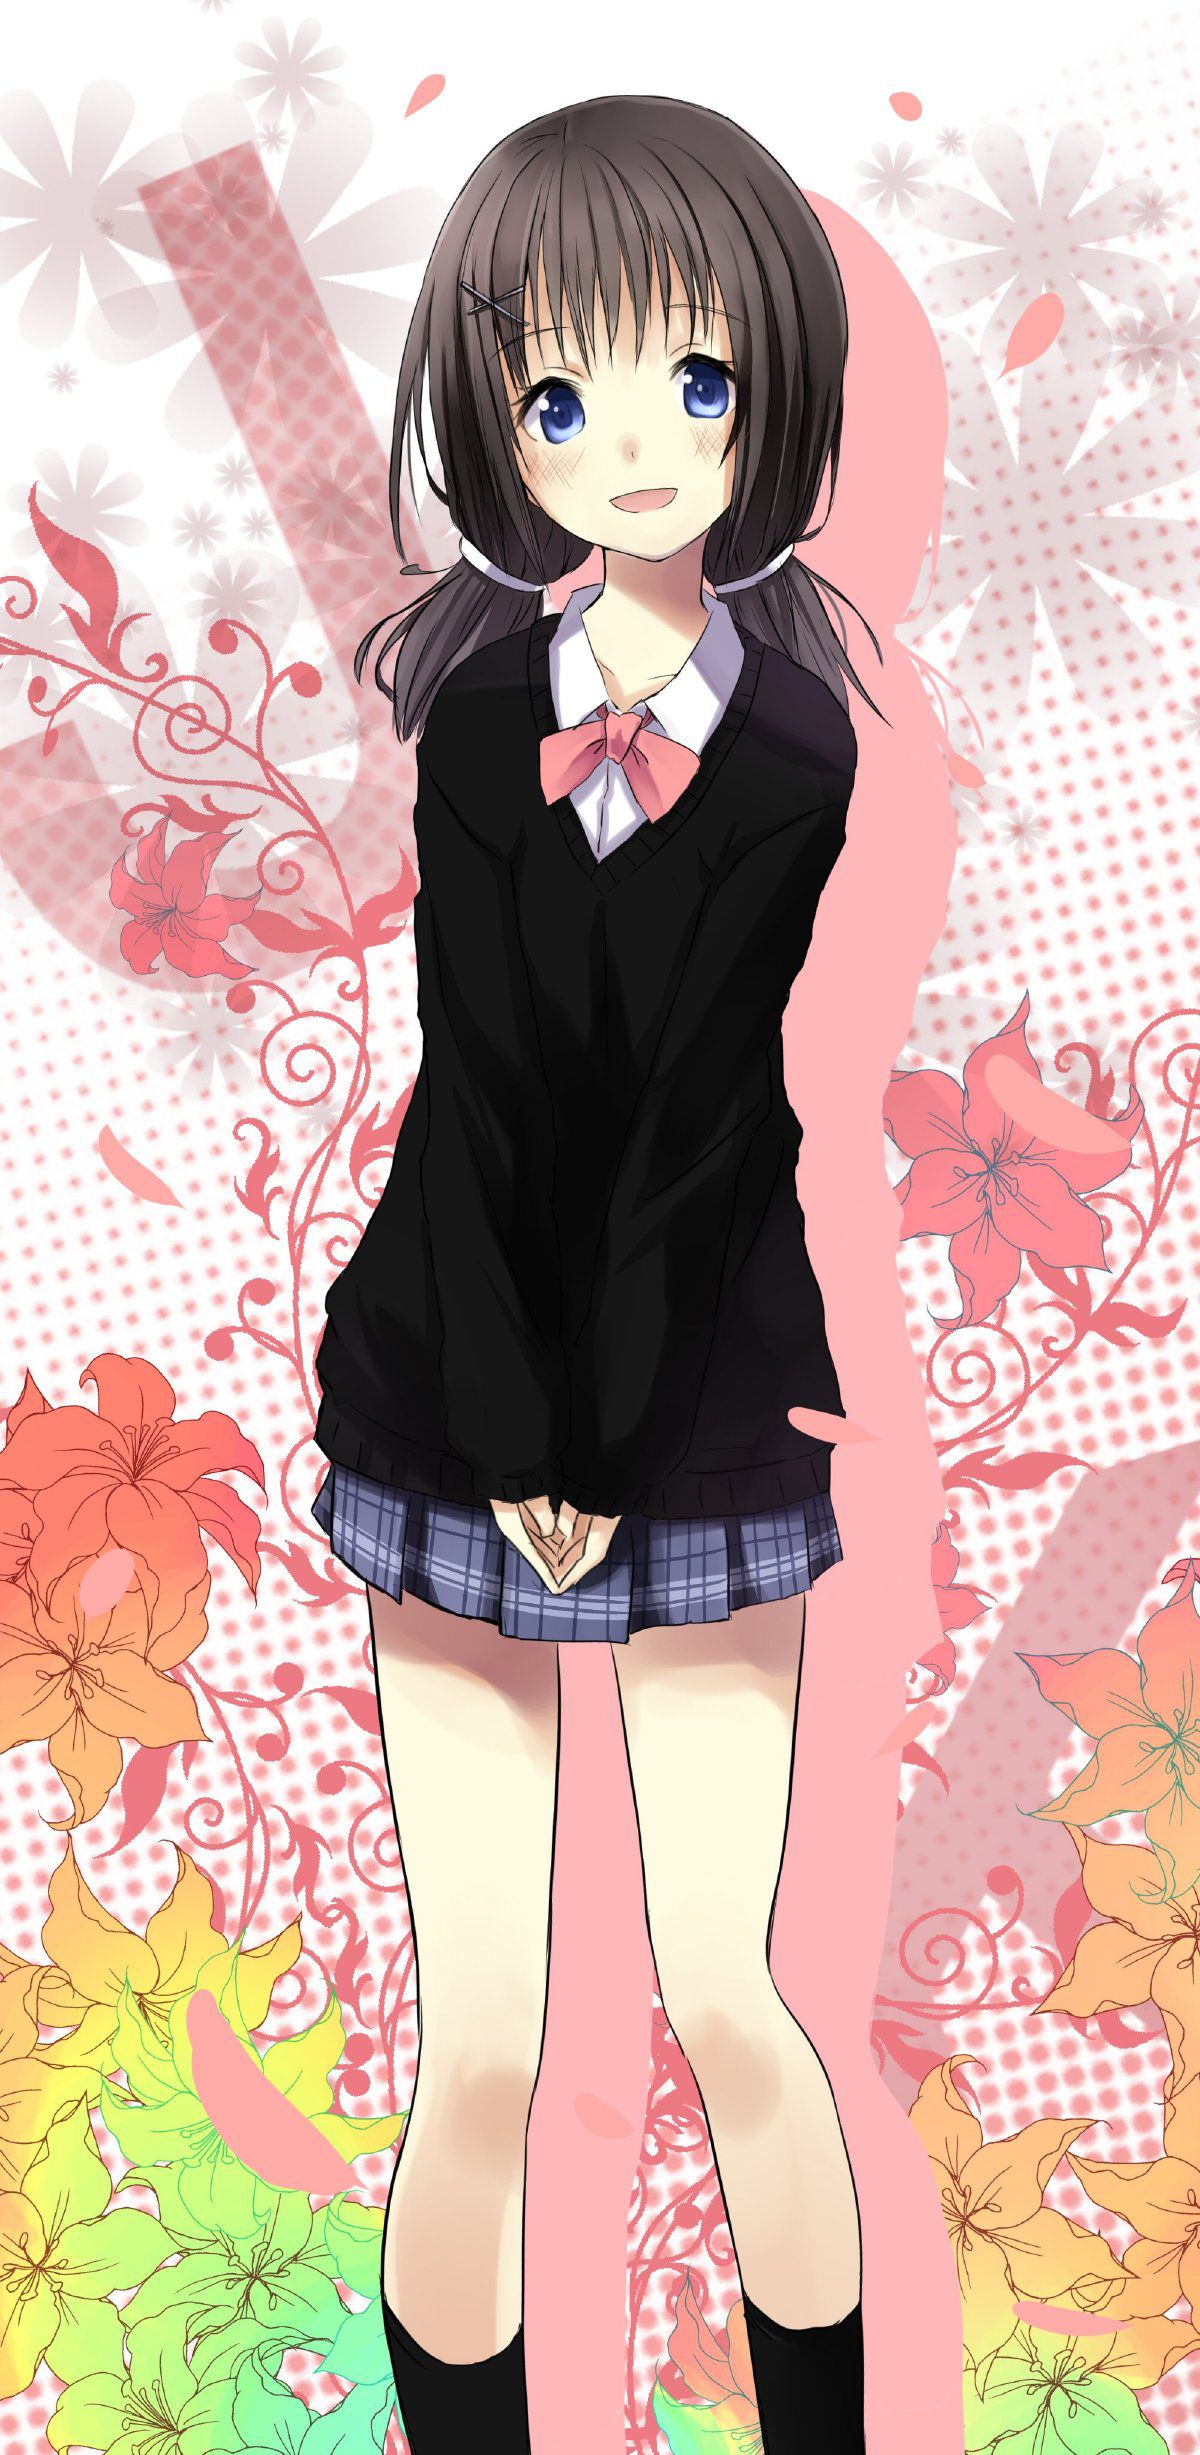 Secondary image of a cute girl in uniform part 24 [Uniform, non-erotic] 31